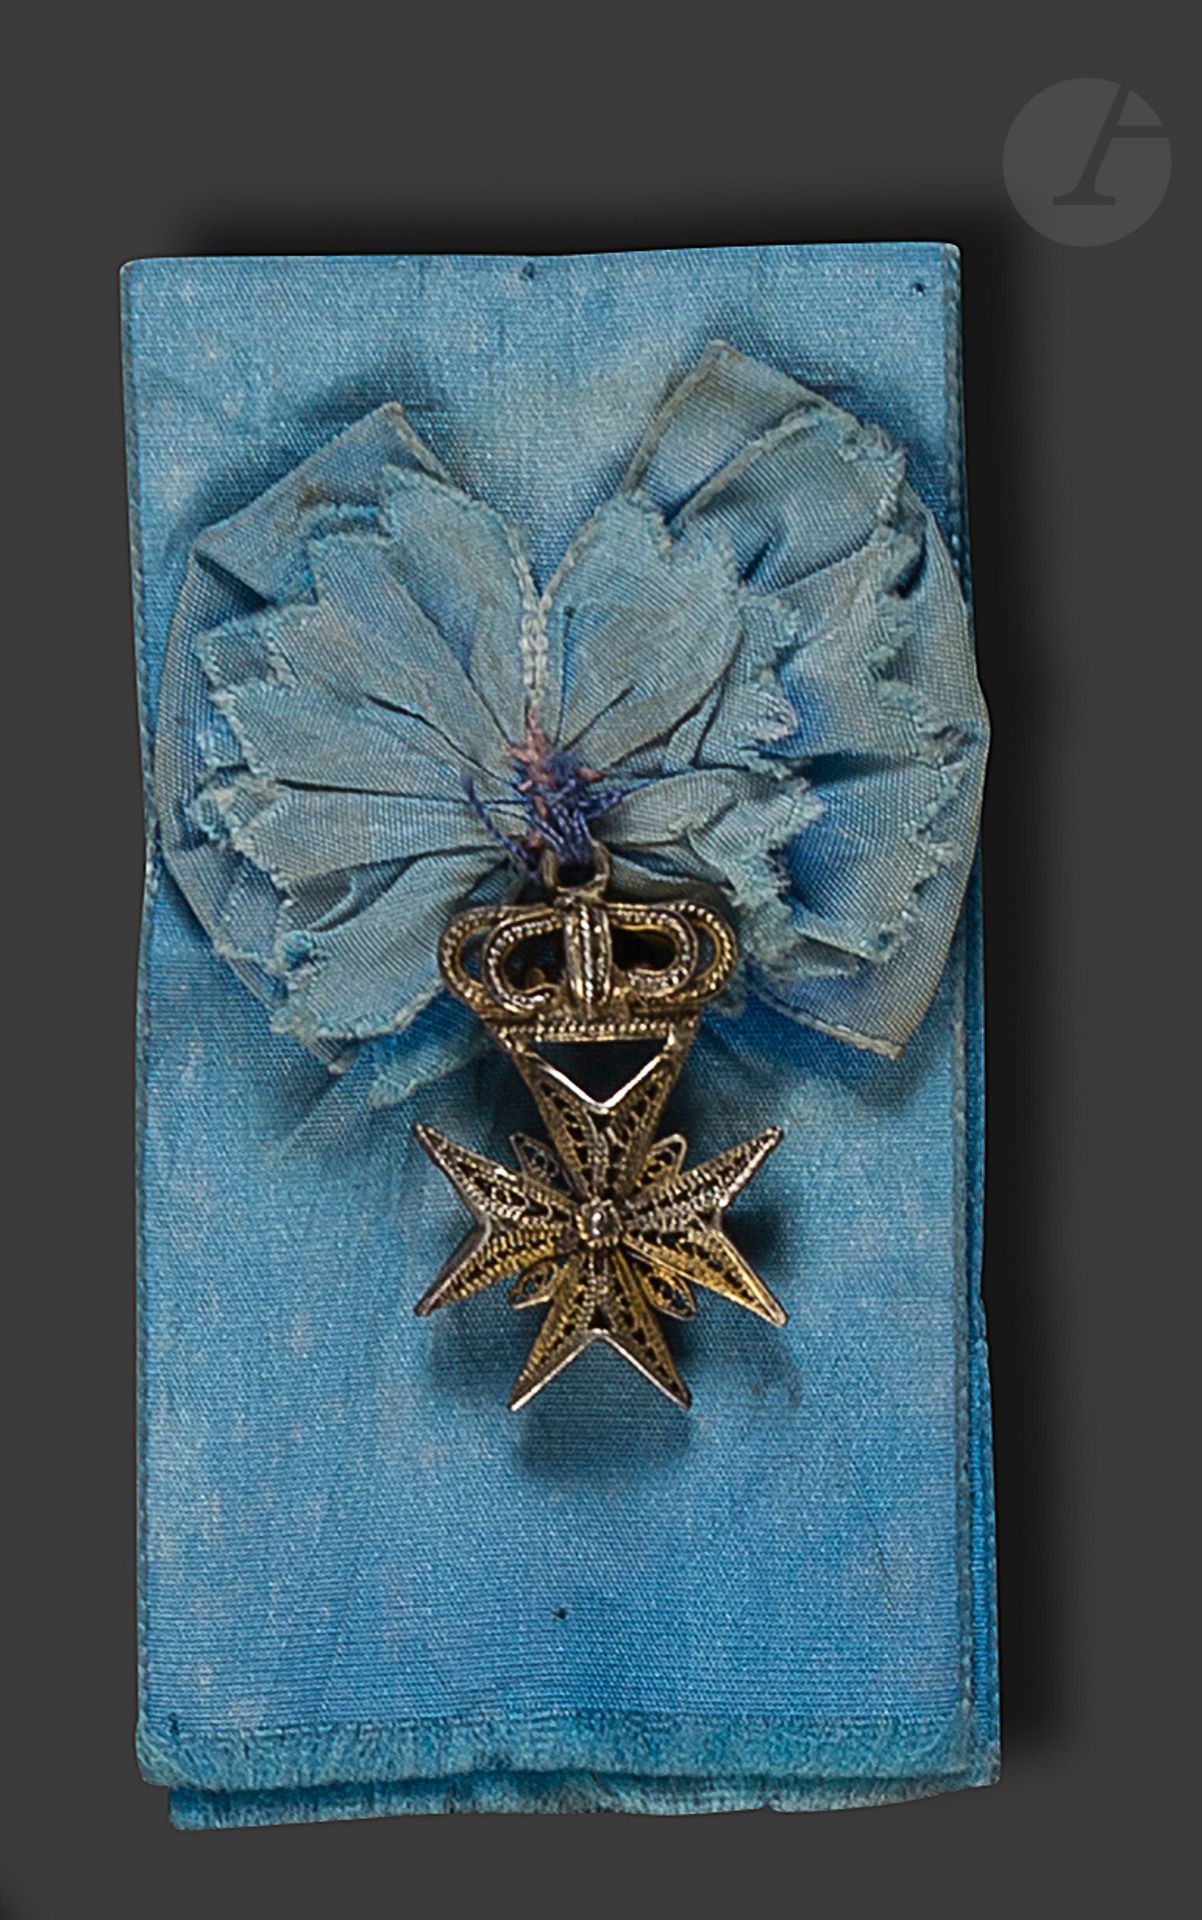 Null 马耳他骑士团：
银色花边皇冠下的美丽马耳他十字架。
 
26 x 22 mm - 毛重：3,4 gT
.

T.

B. 19

世纪

早期

。